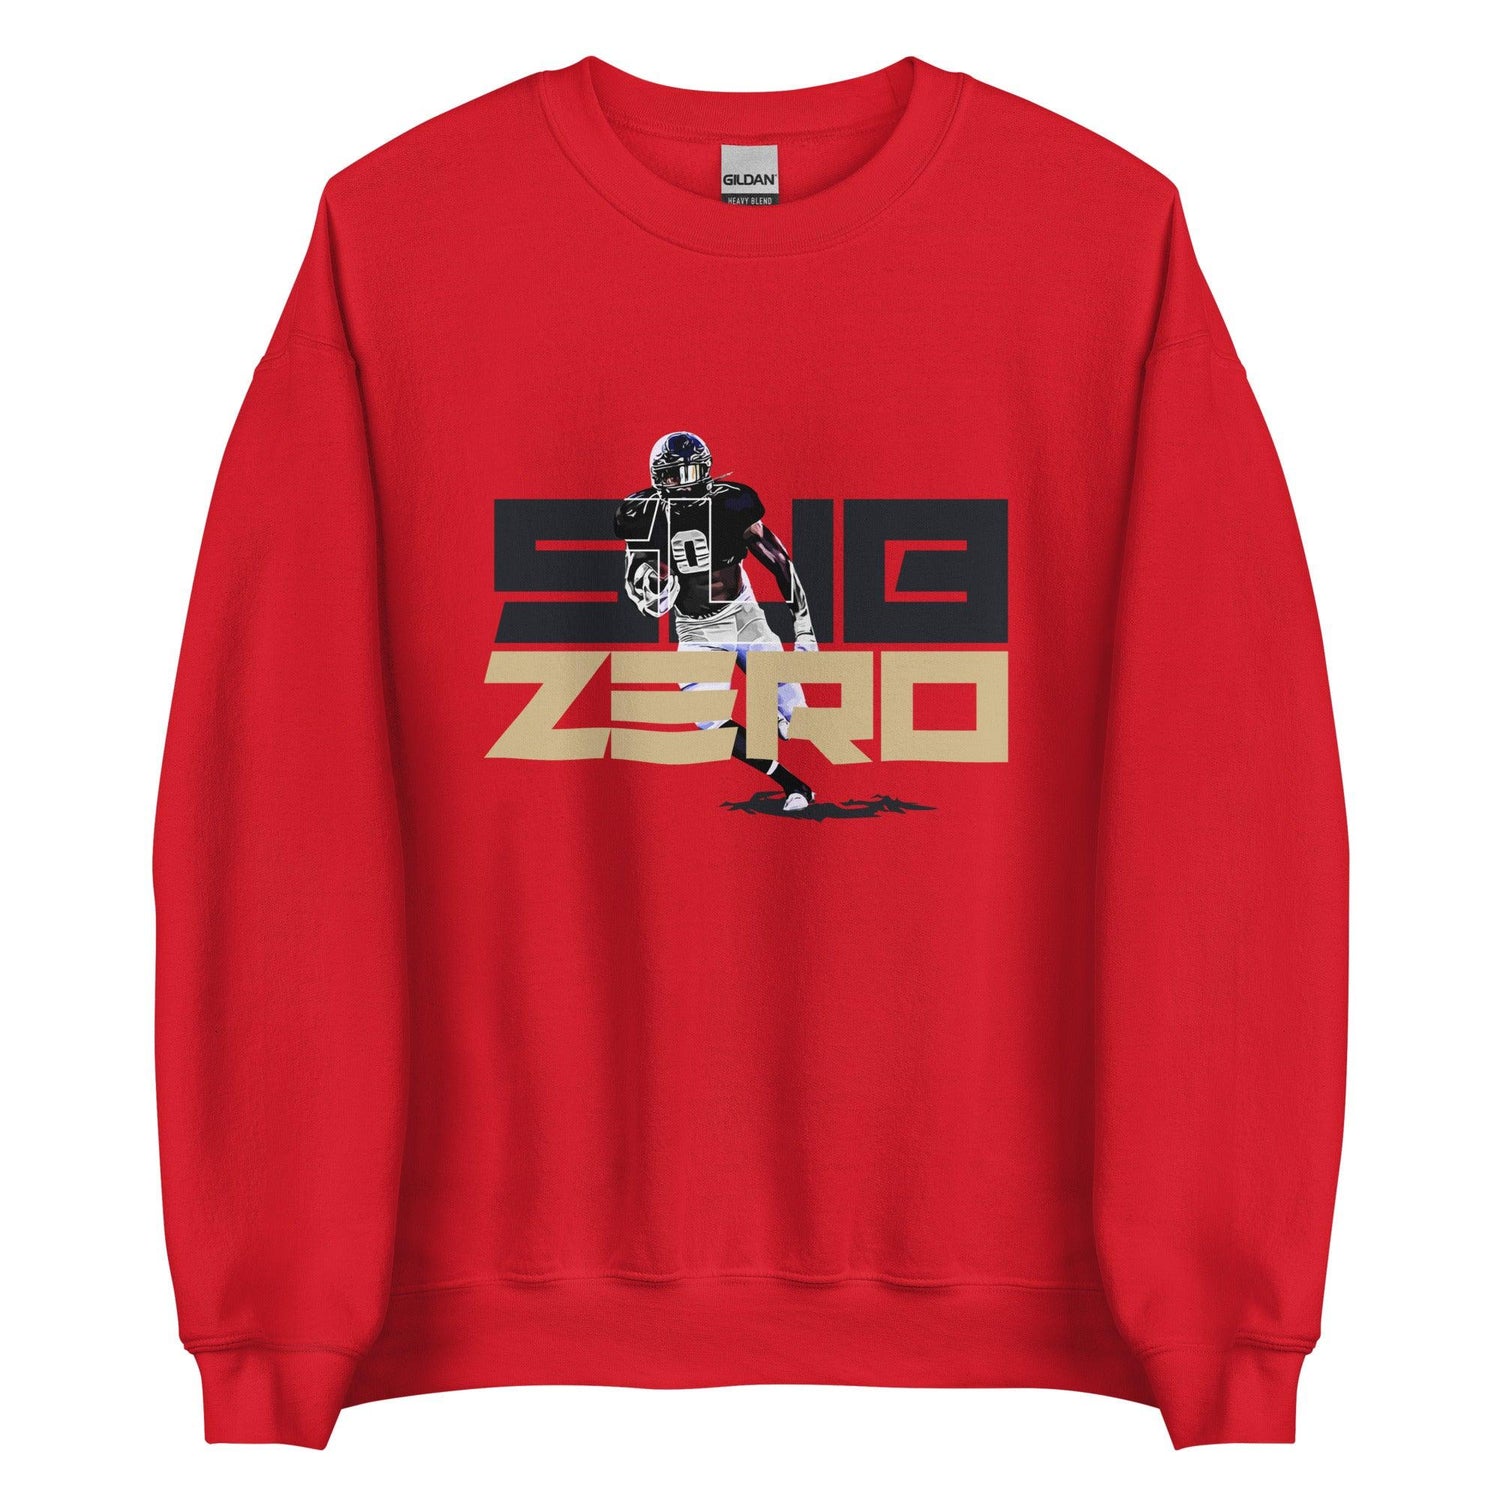 Christian Turner “Sub Zero” Sweatshirt - Fan Arch